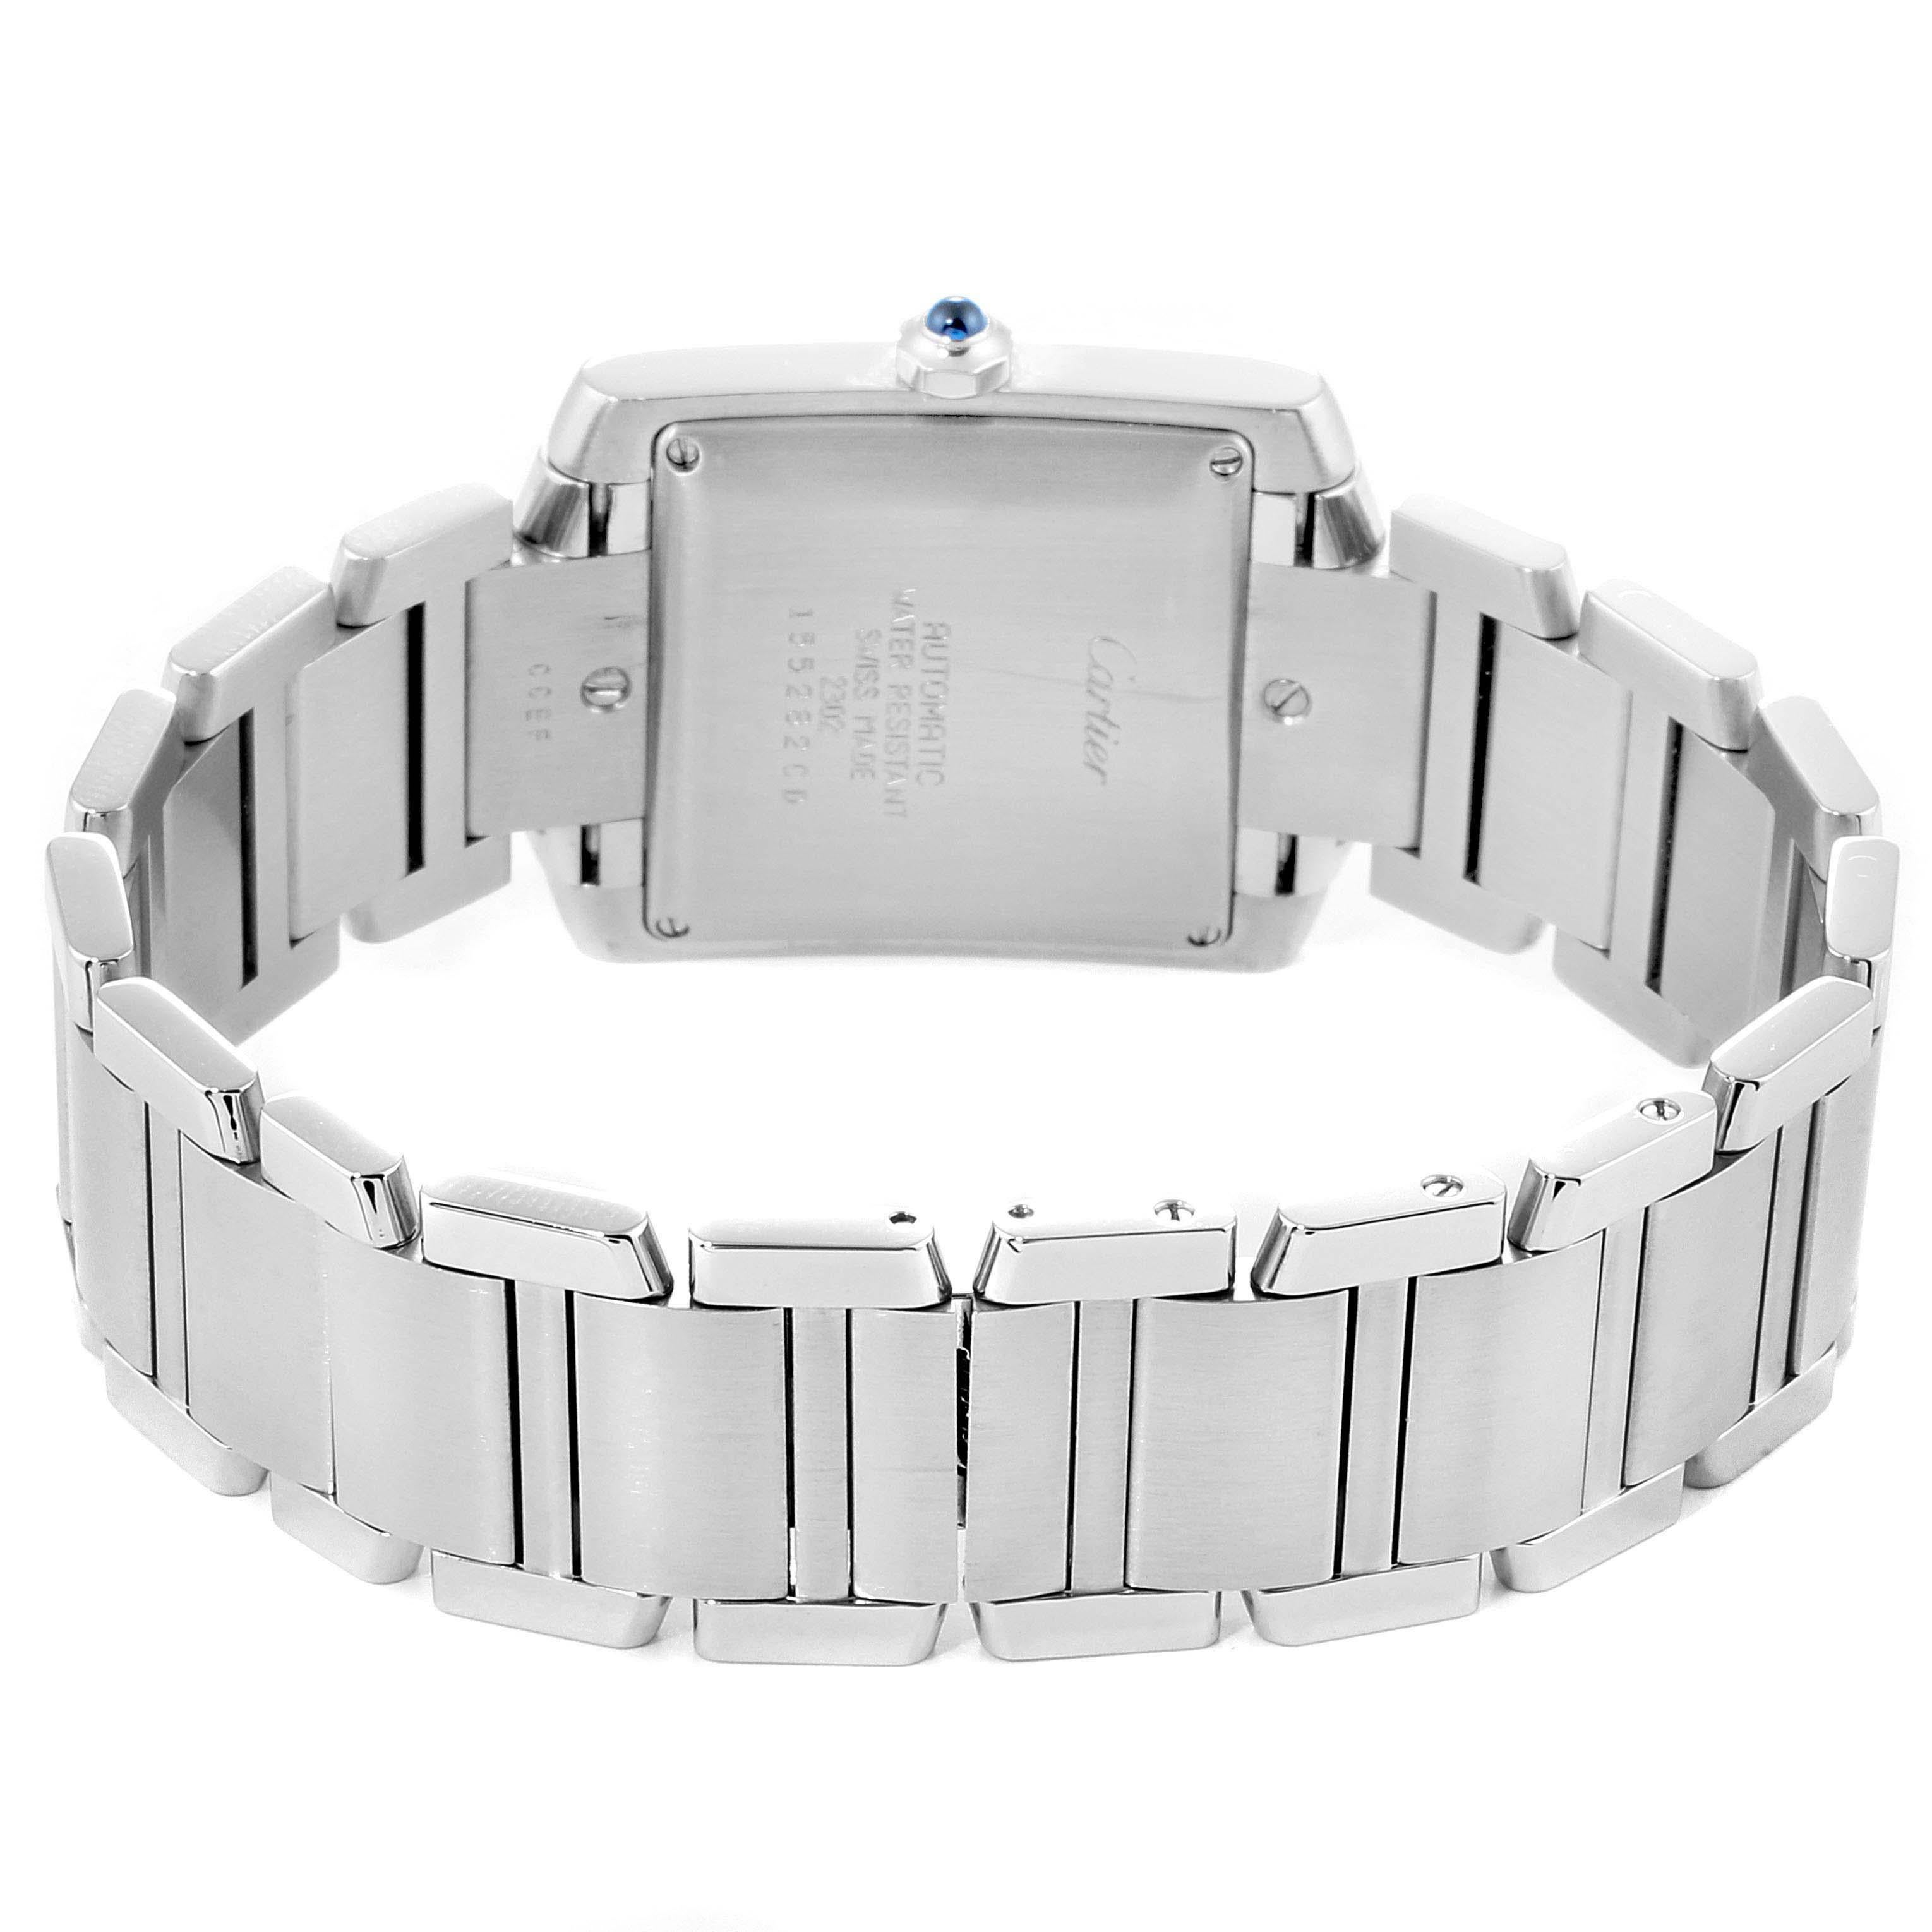 Cartier Tank Francaise Blue Hands Steel Automatic Men's Watch W51002Q3 3